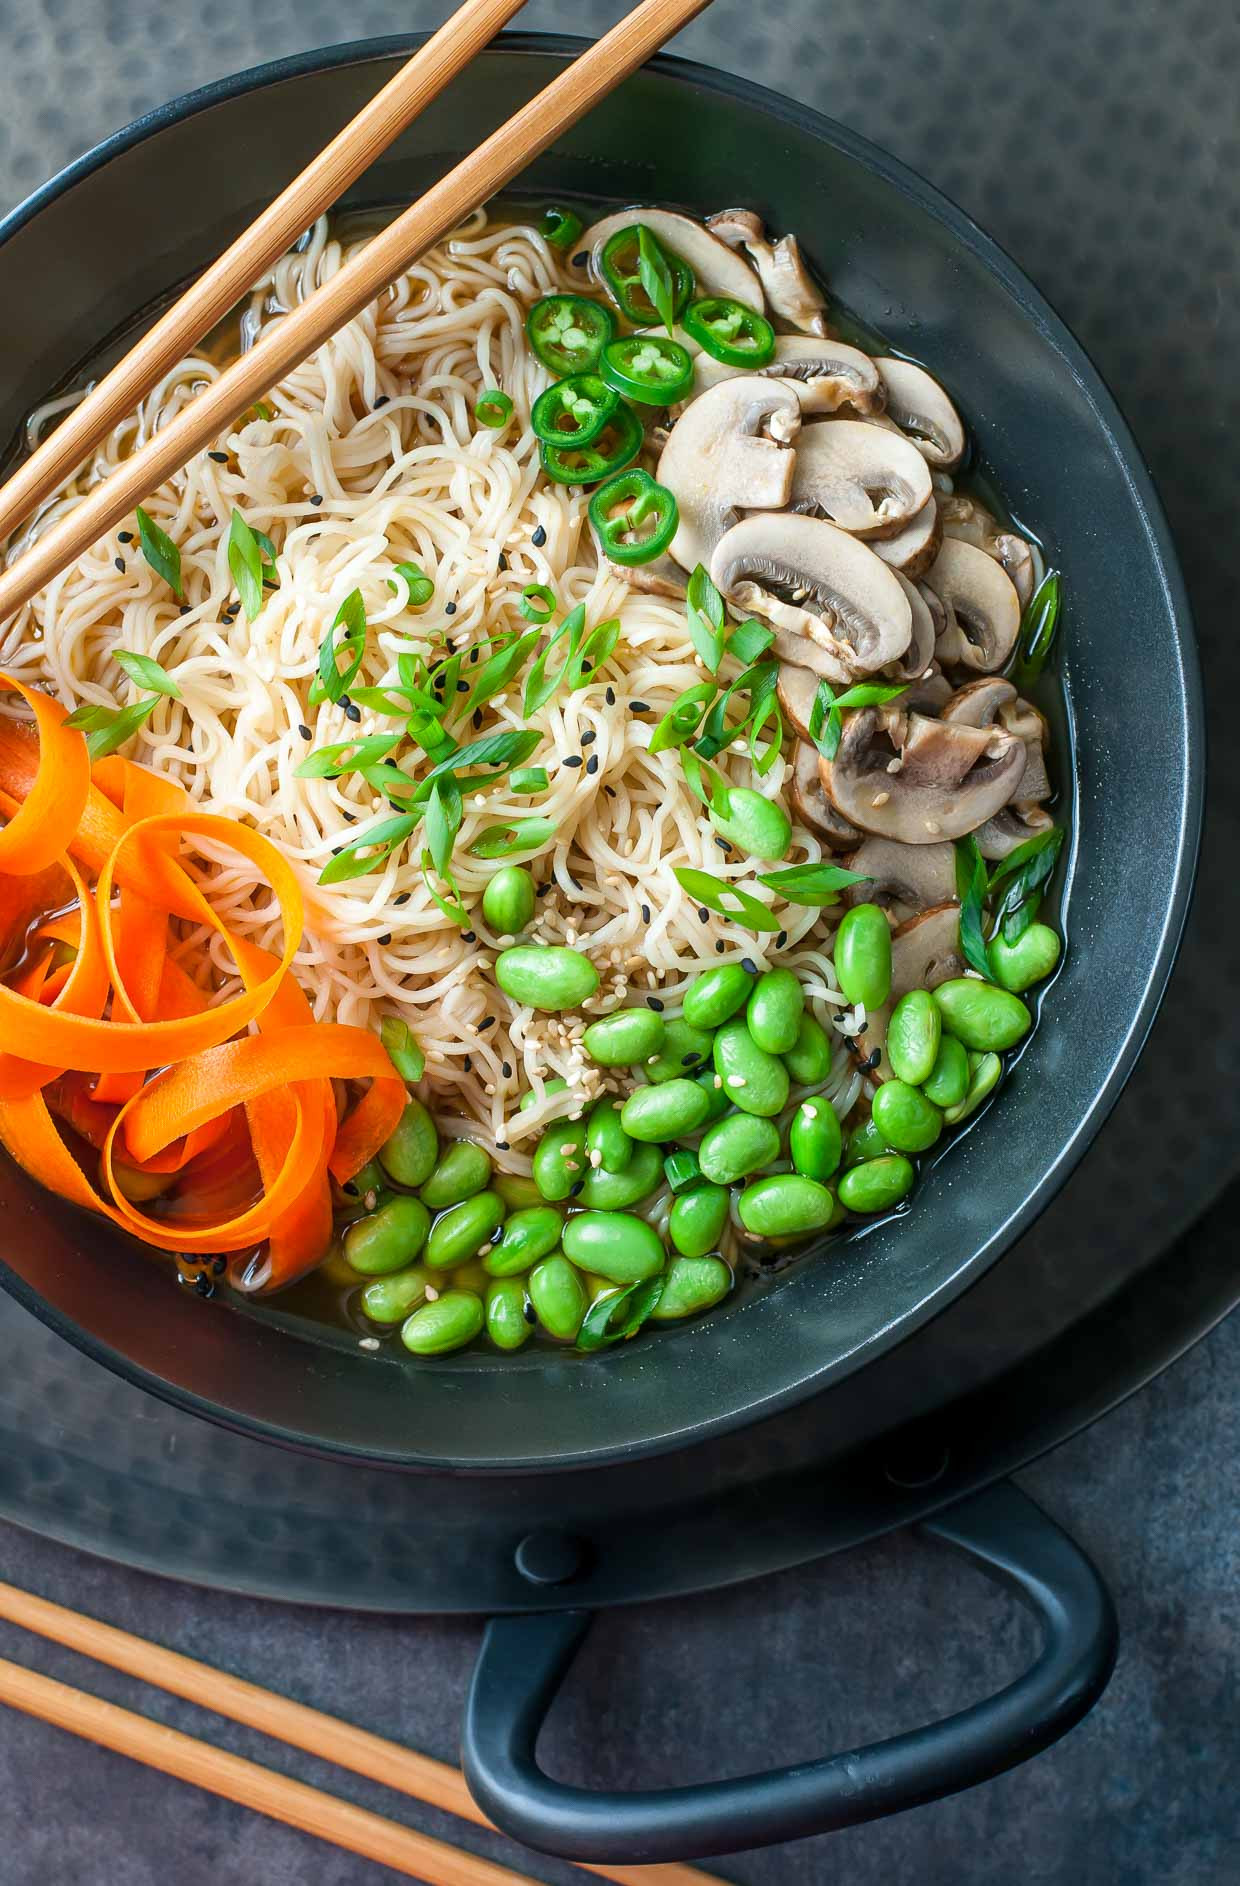 Vegan Soybean Recipes
 Vegan Ramen Bowls with Edamame and Mushrooms Peas And